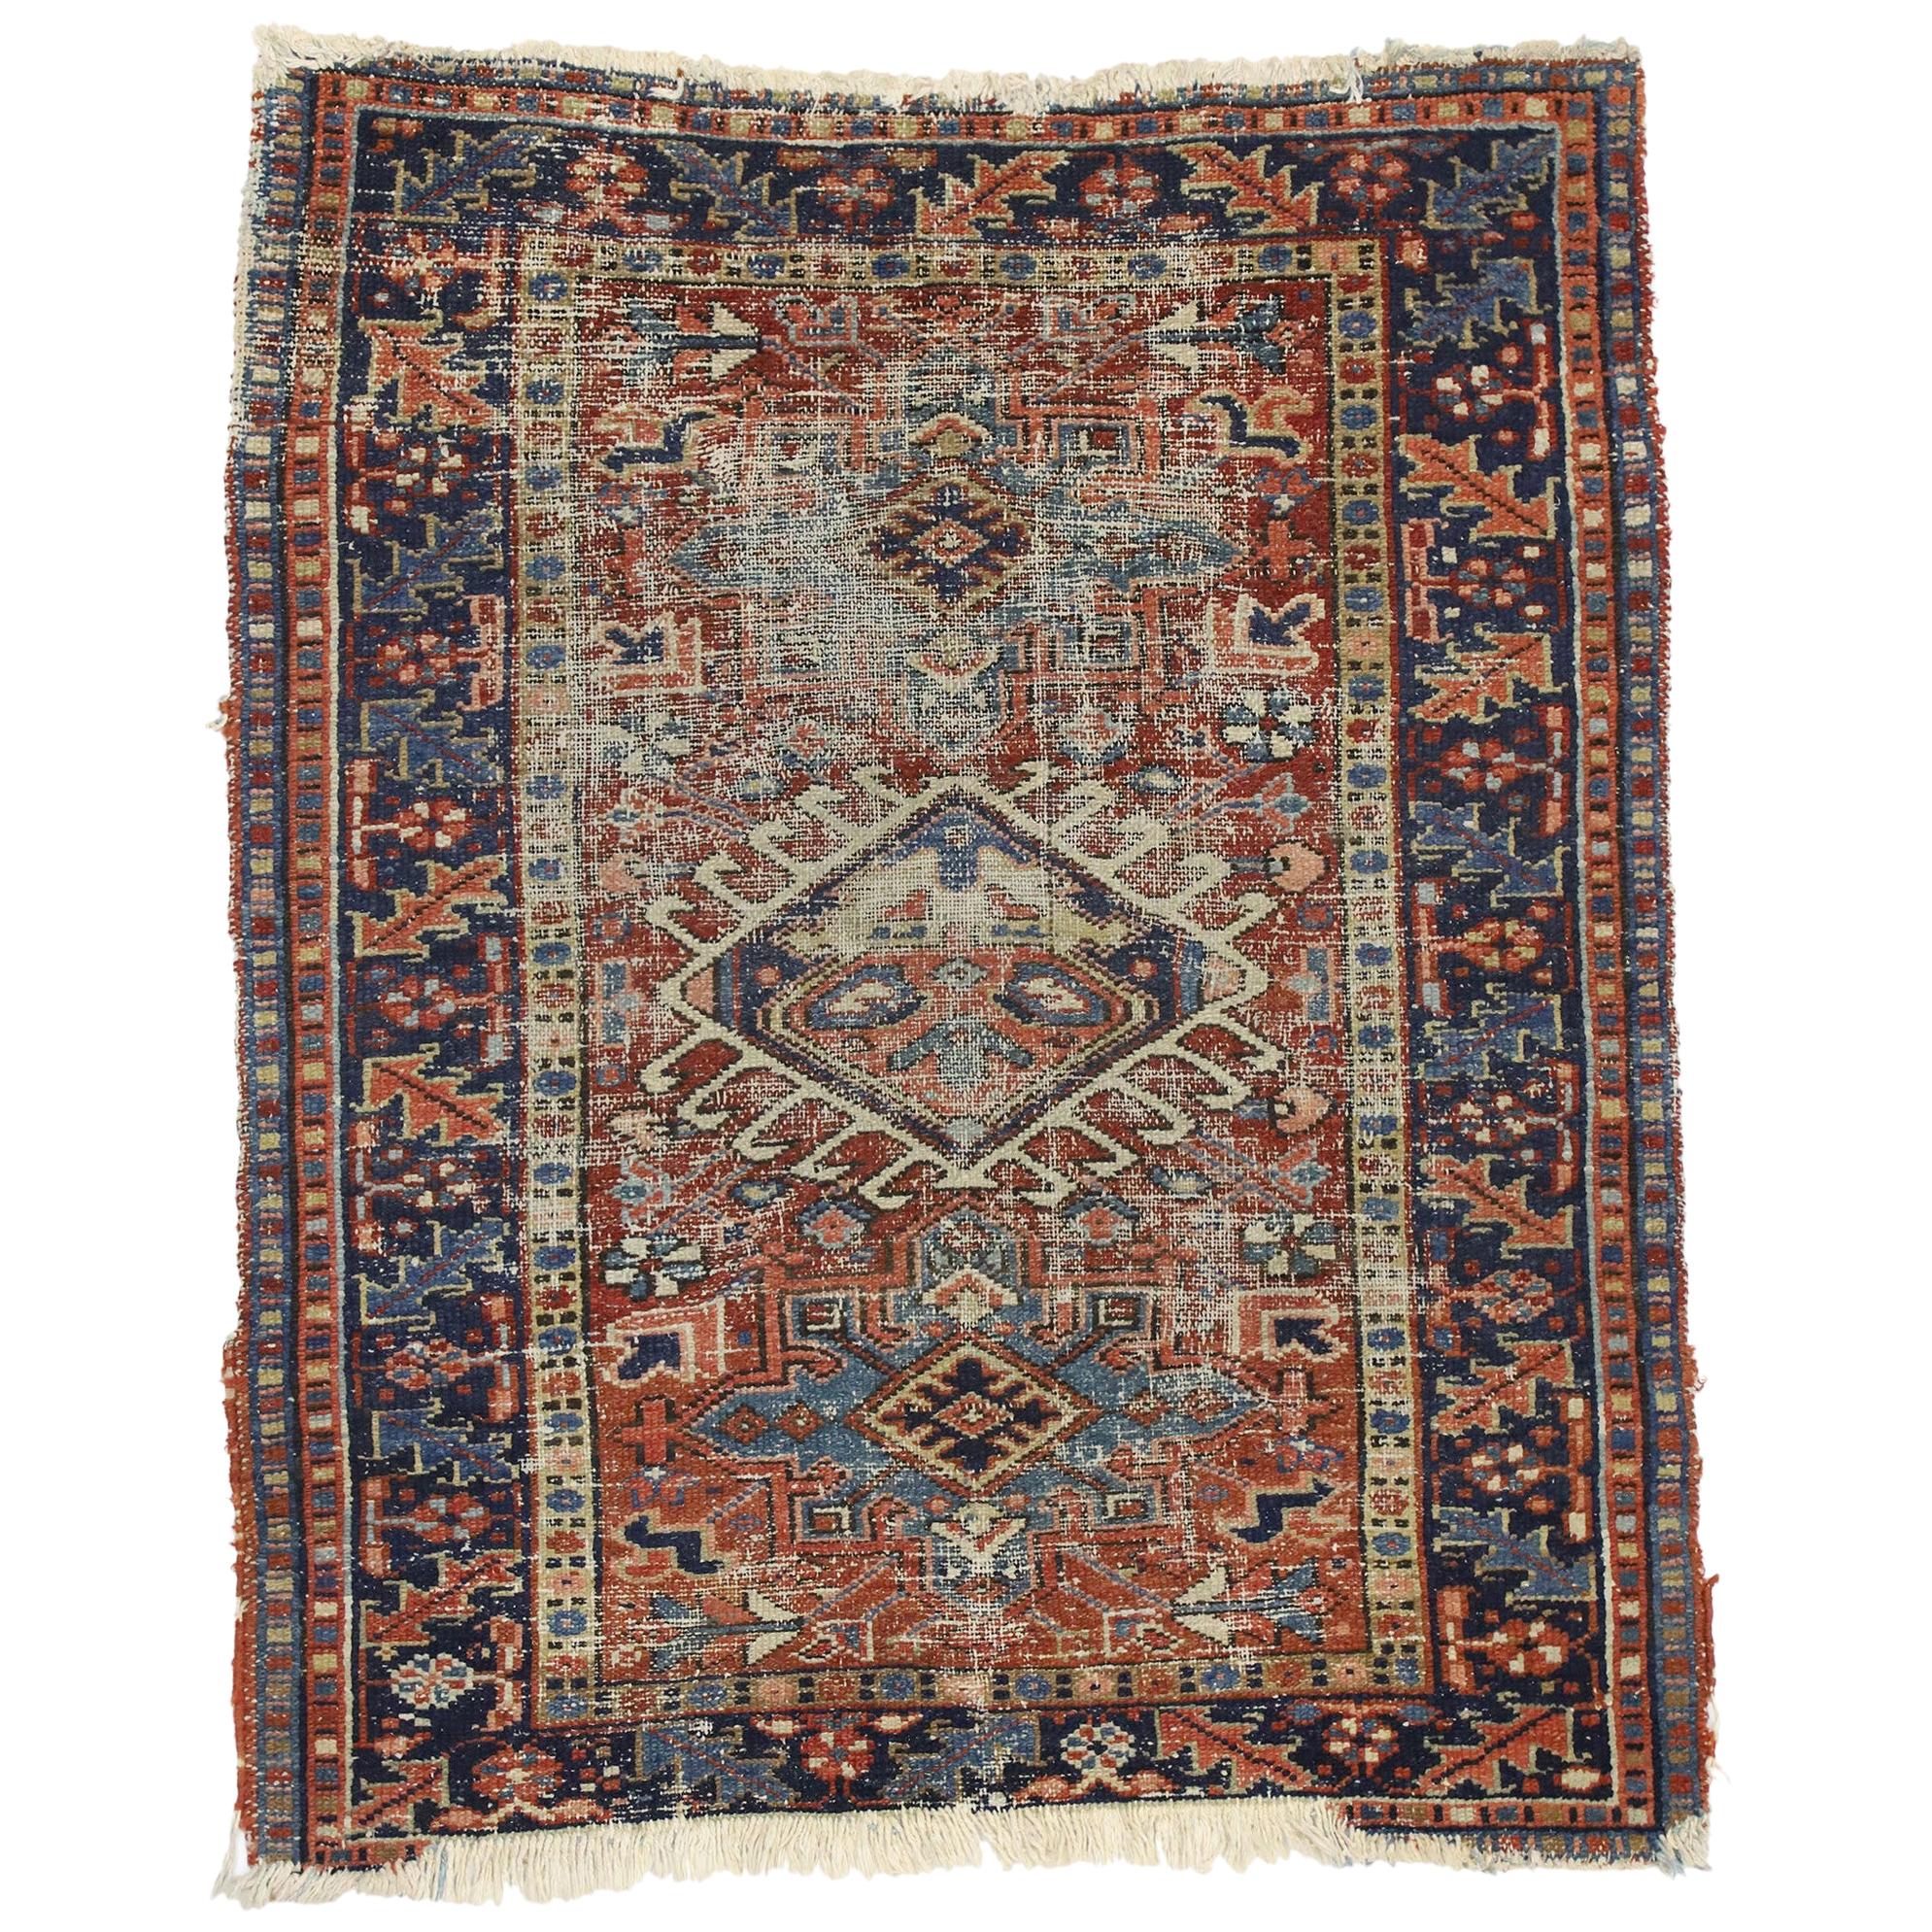 Distressed Antique Persian Heriz Karaja Rug with Rustic Artisan Style